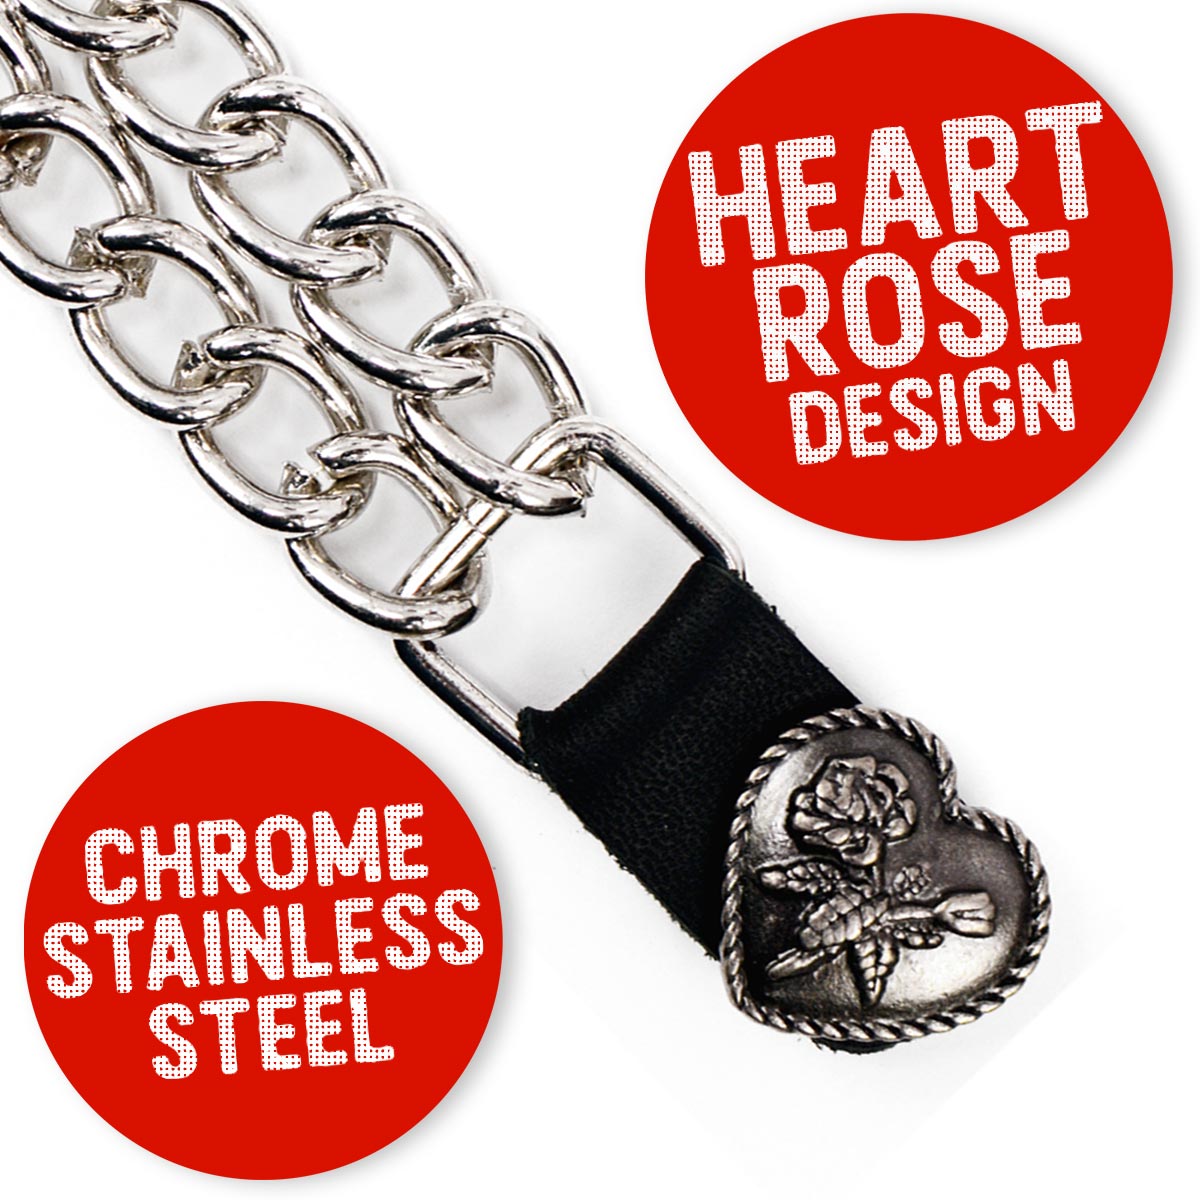 Milwaukee Leather Heart Rose Medallion Vest Extender - Double Chrome Chains Genuine Leather 6.5" Extension 4-PCS MLA6013SET